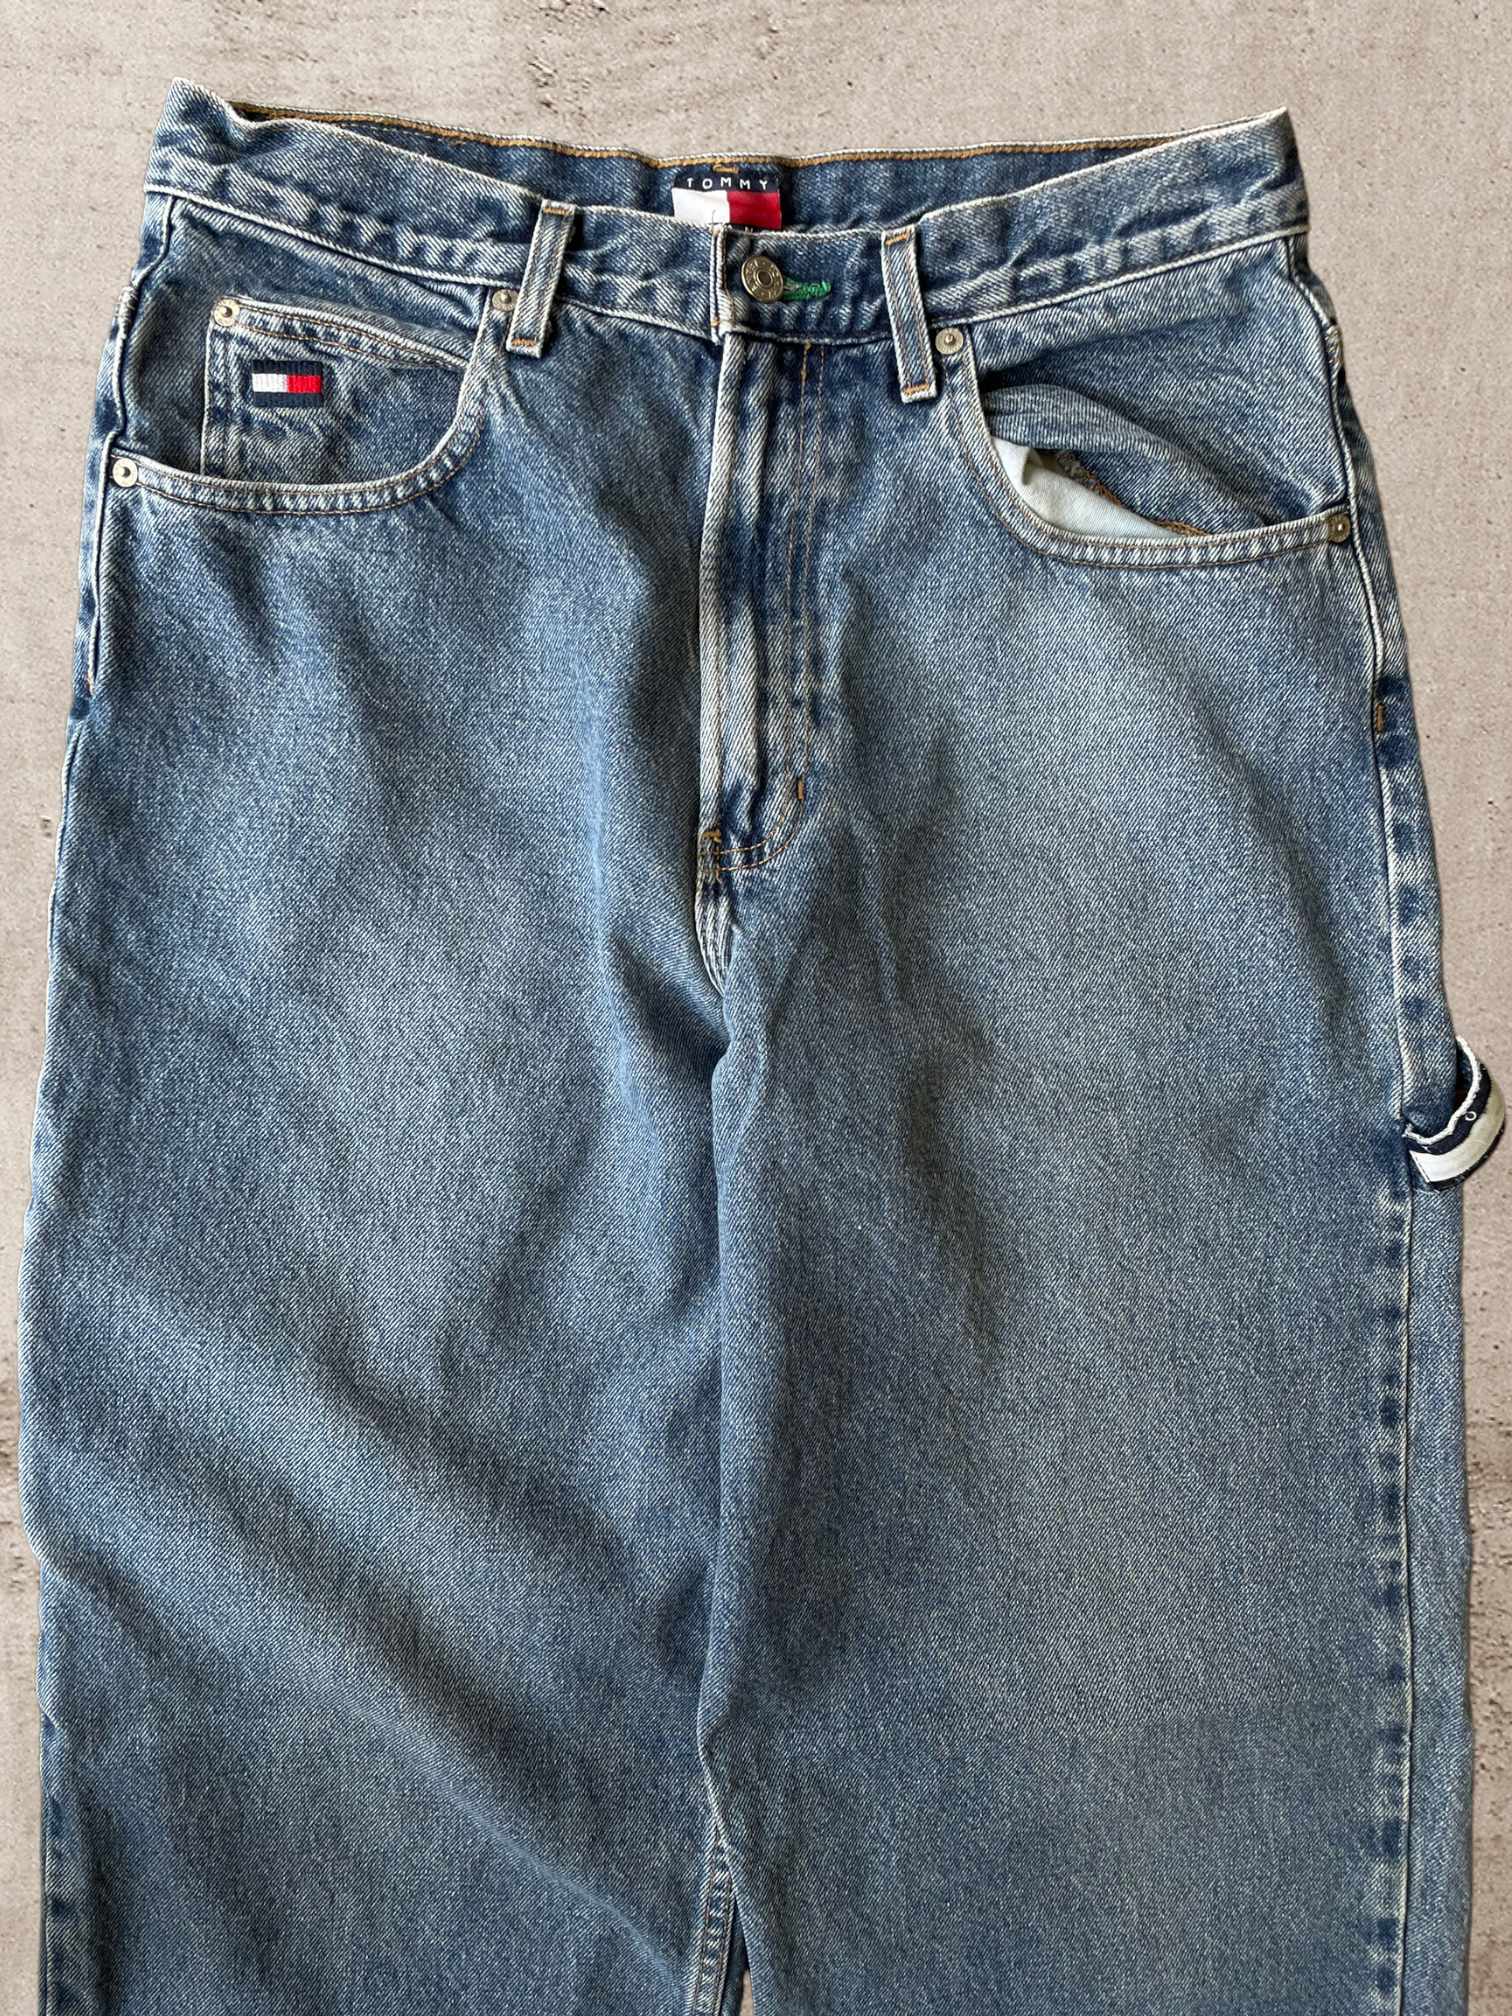 90s Tommy Hilfiger Baggy Carpenter Jeans -32x32